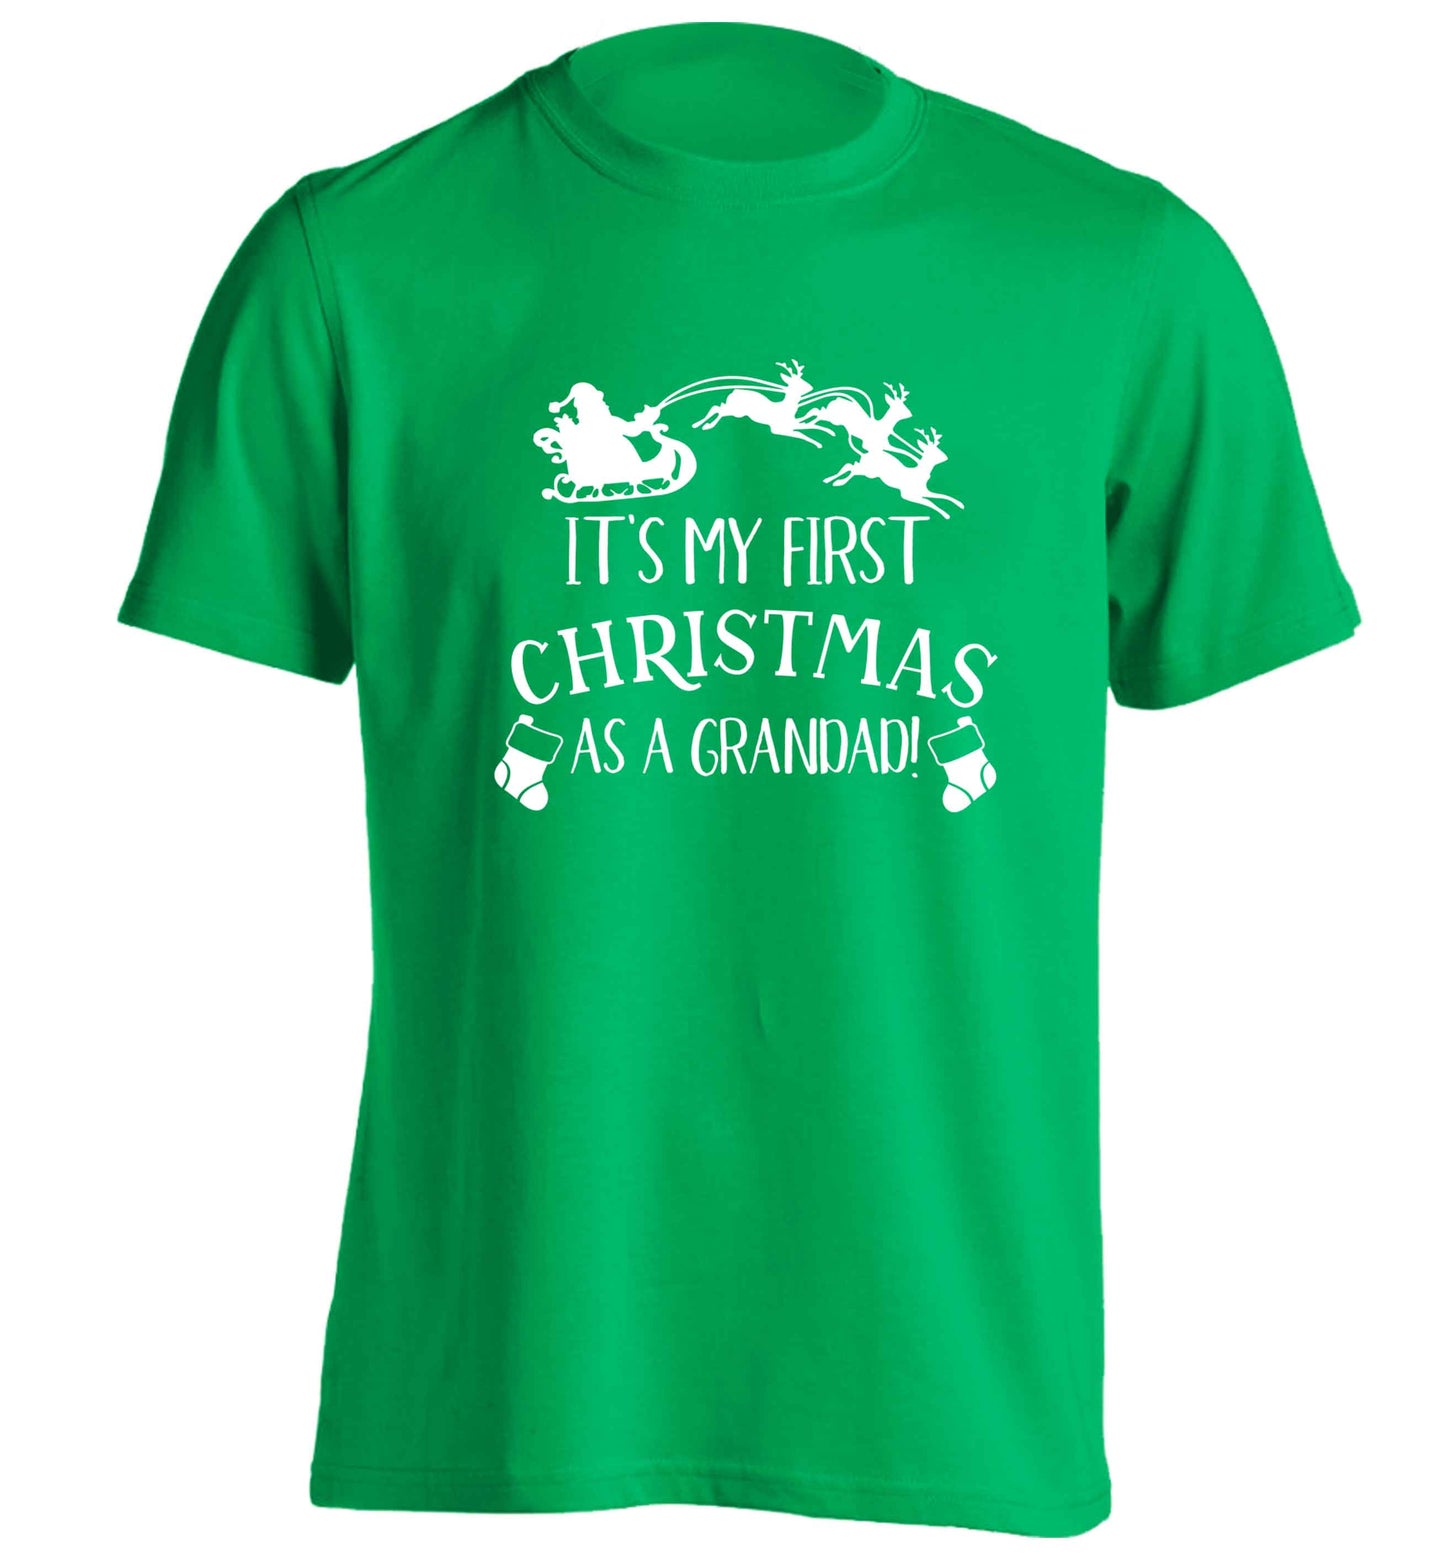 It's my first Christmas as a grandad! adults unisex green Tshirt 2XL